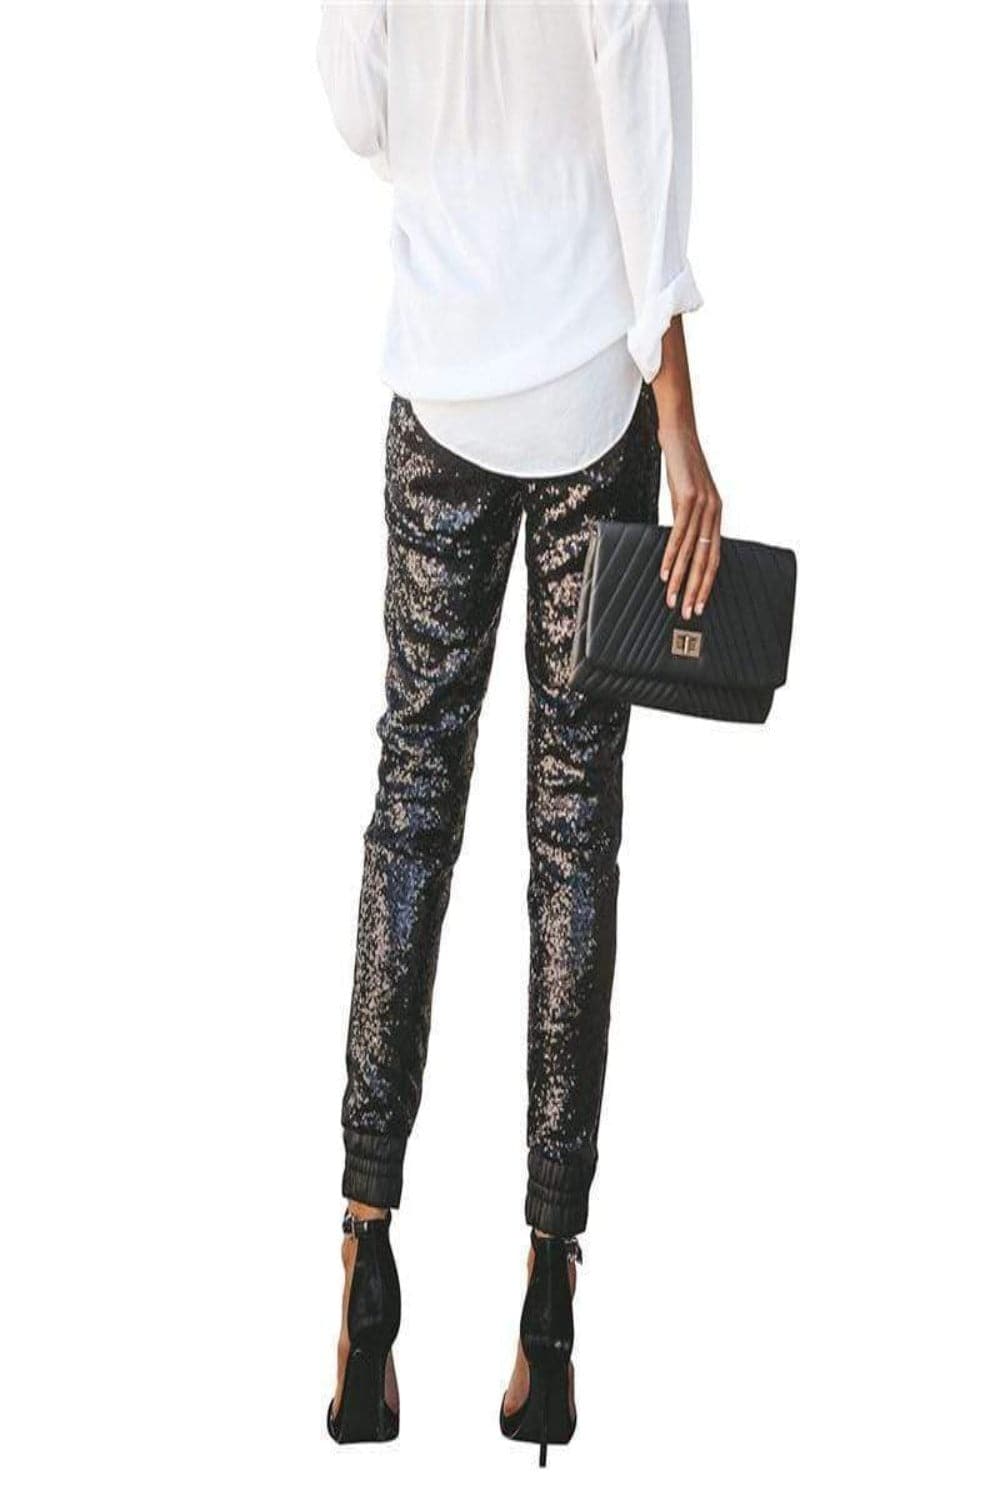 All That Glam Glitter Stretch Sequin Elastic Skinny Leg Pants - Black - TGC Boutique - Pants